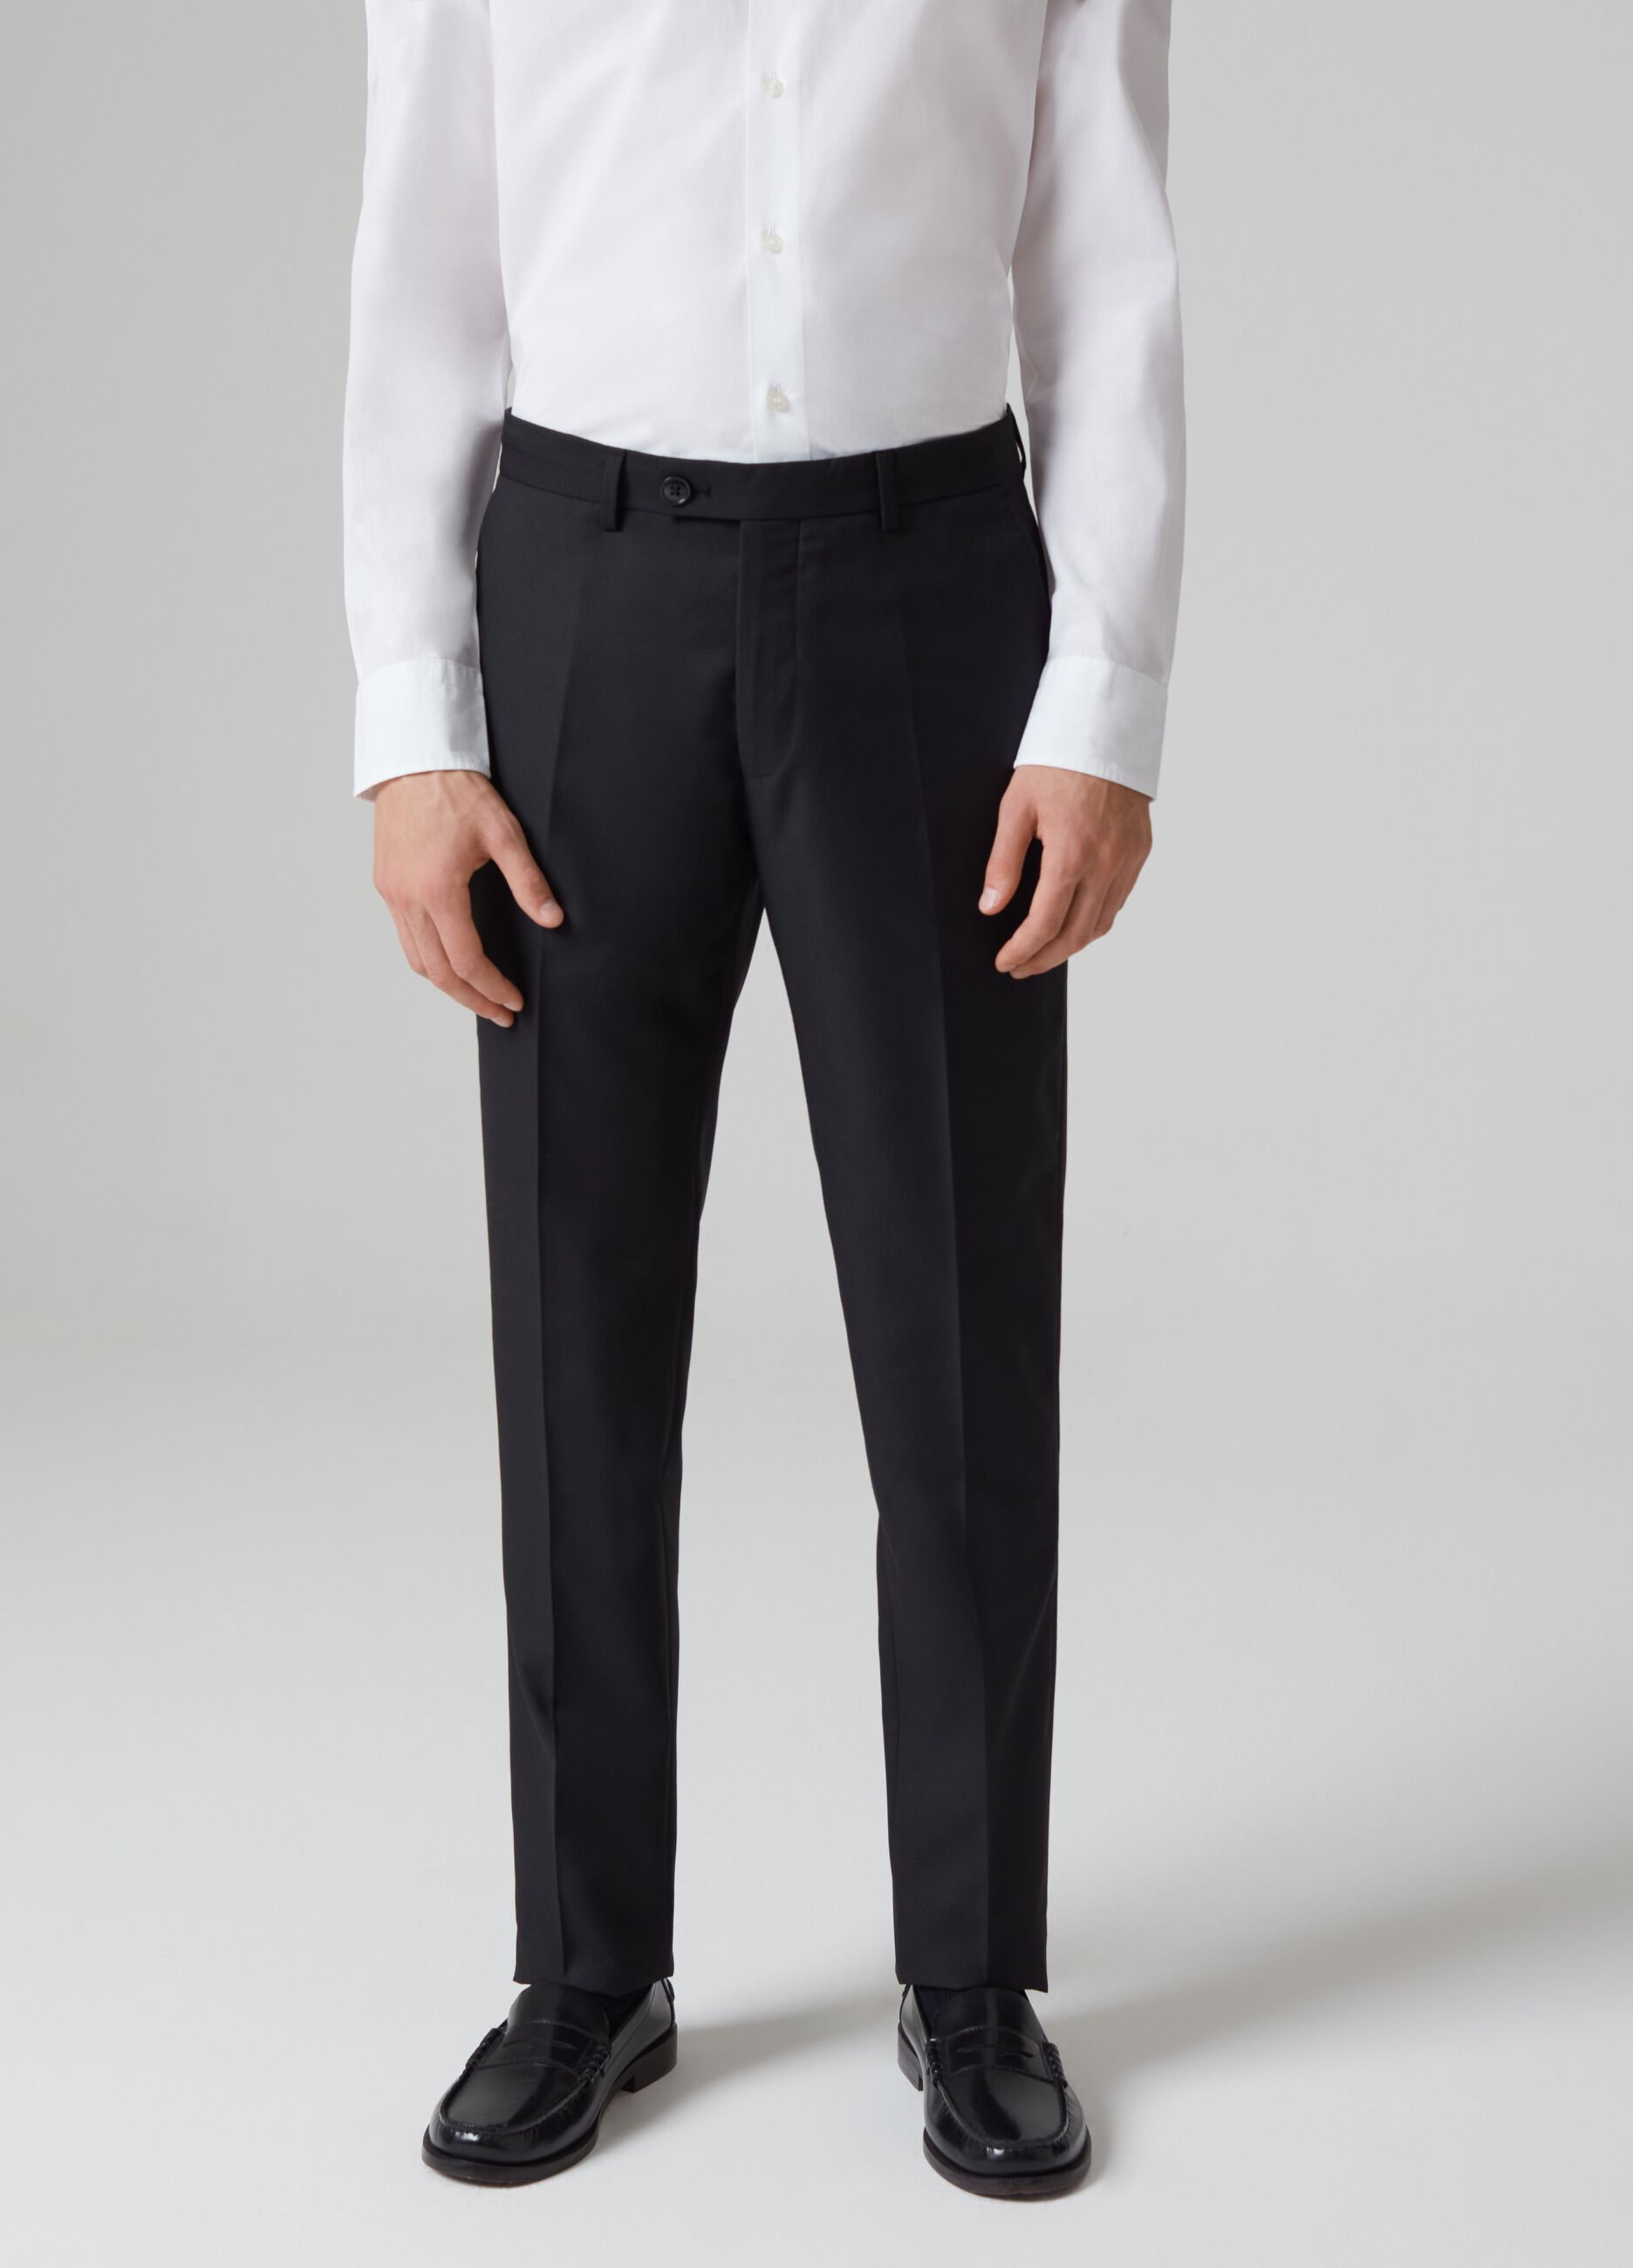 Buy SweatyRocks Women's Elegant High Waist Solid Long Pants Office Trousers  Khaki S at Amazon.in